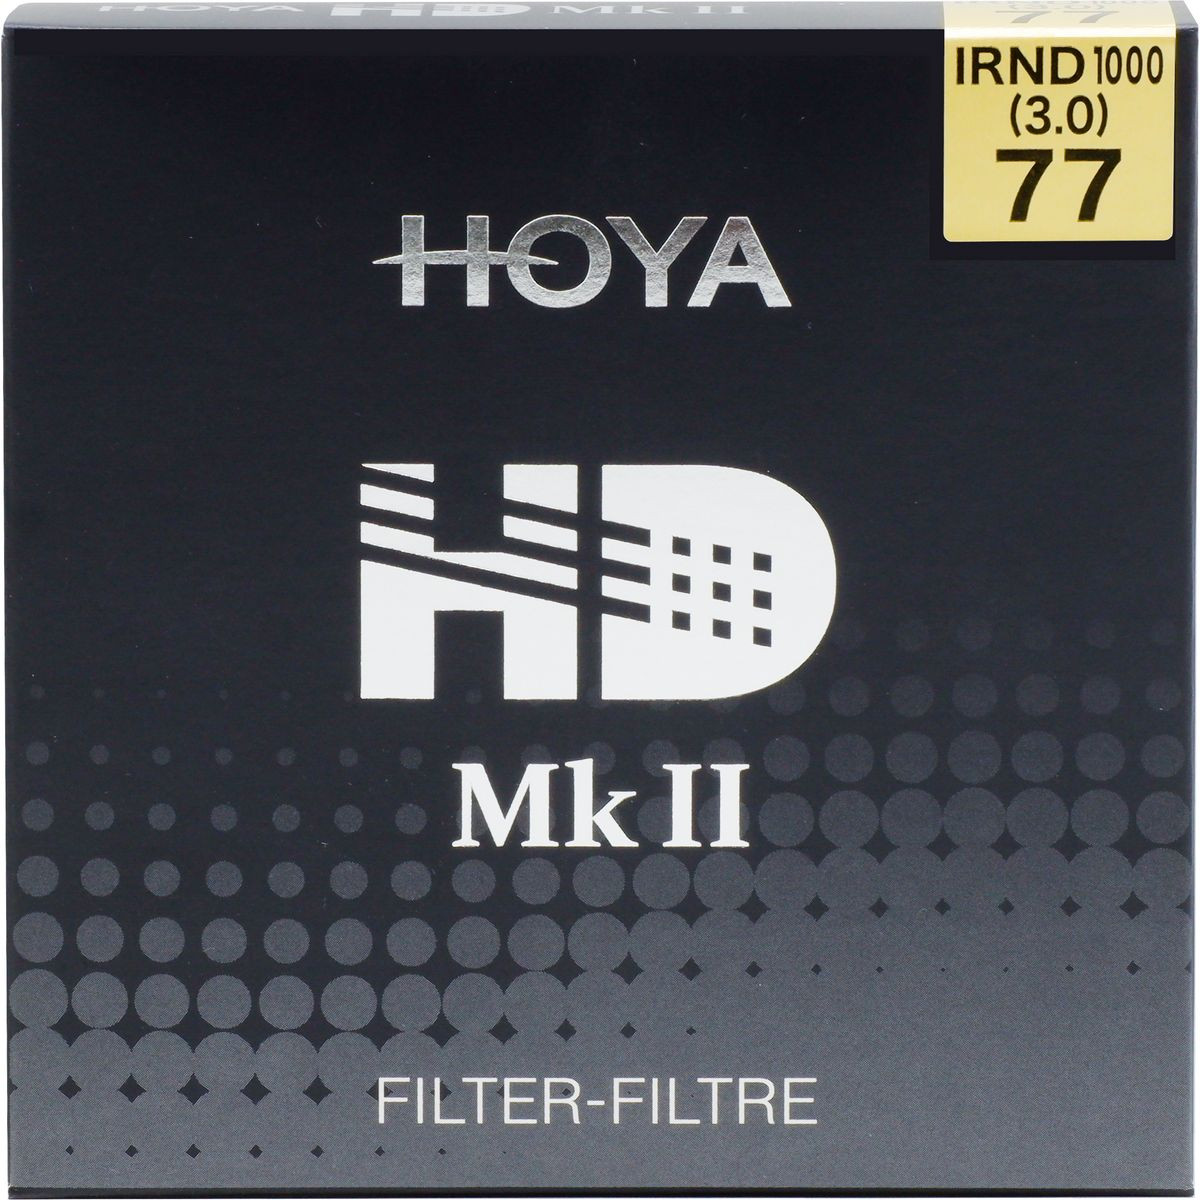 Hoya 72.0mm HD MkII IRND1000 (3.0)